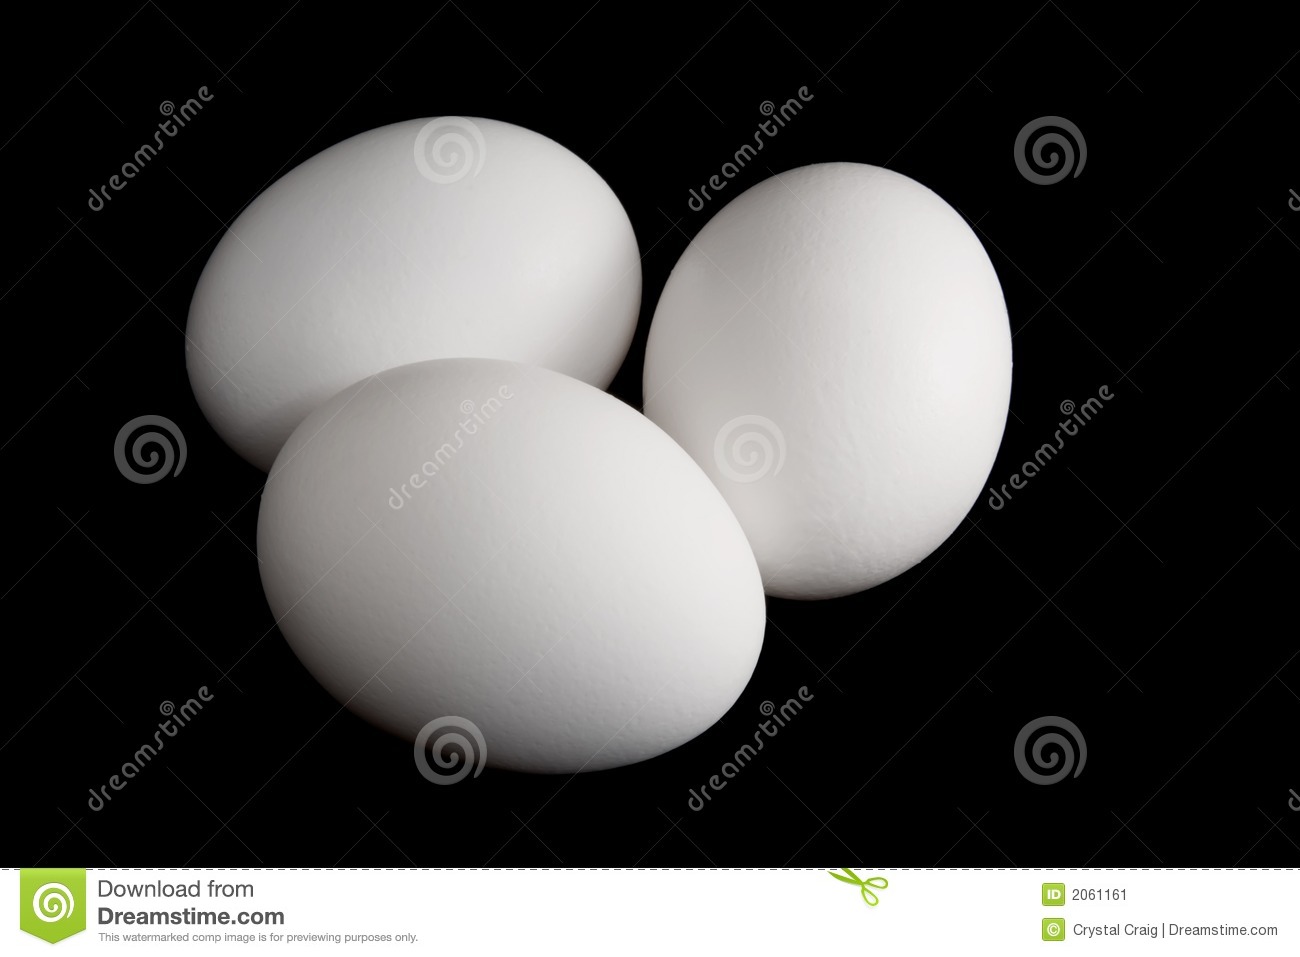 Three Plain White Eggs On A Black Background Mr No Pr No 3 2308 7